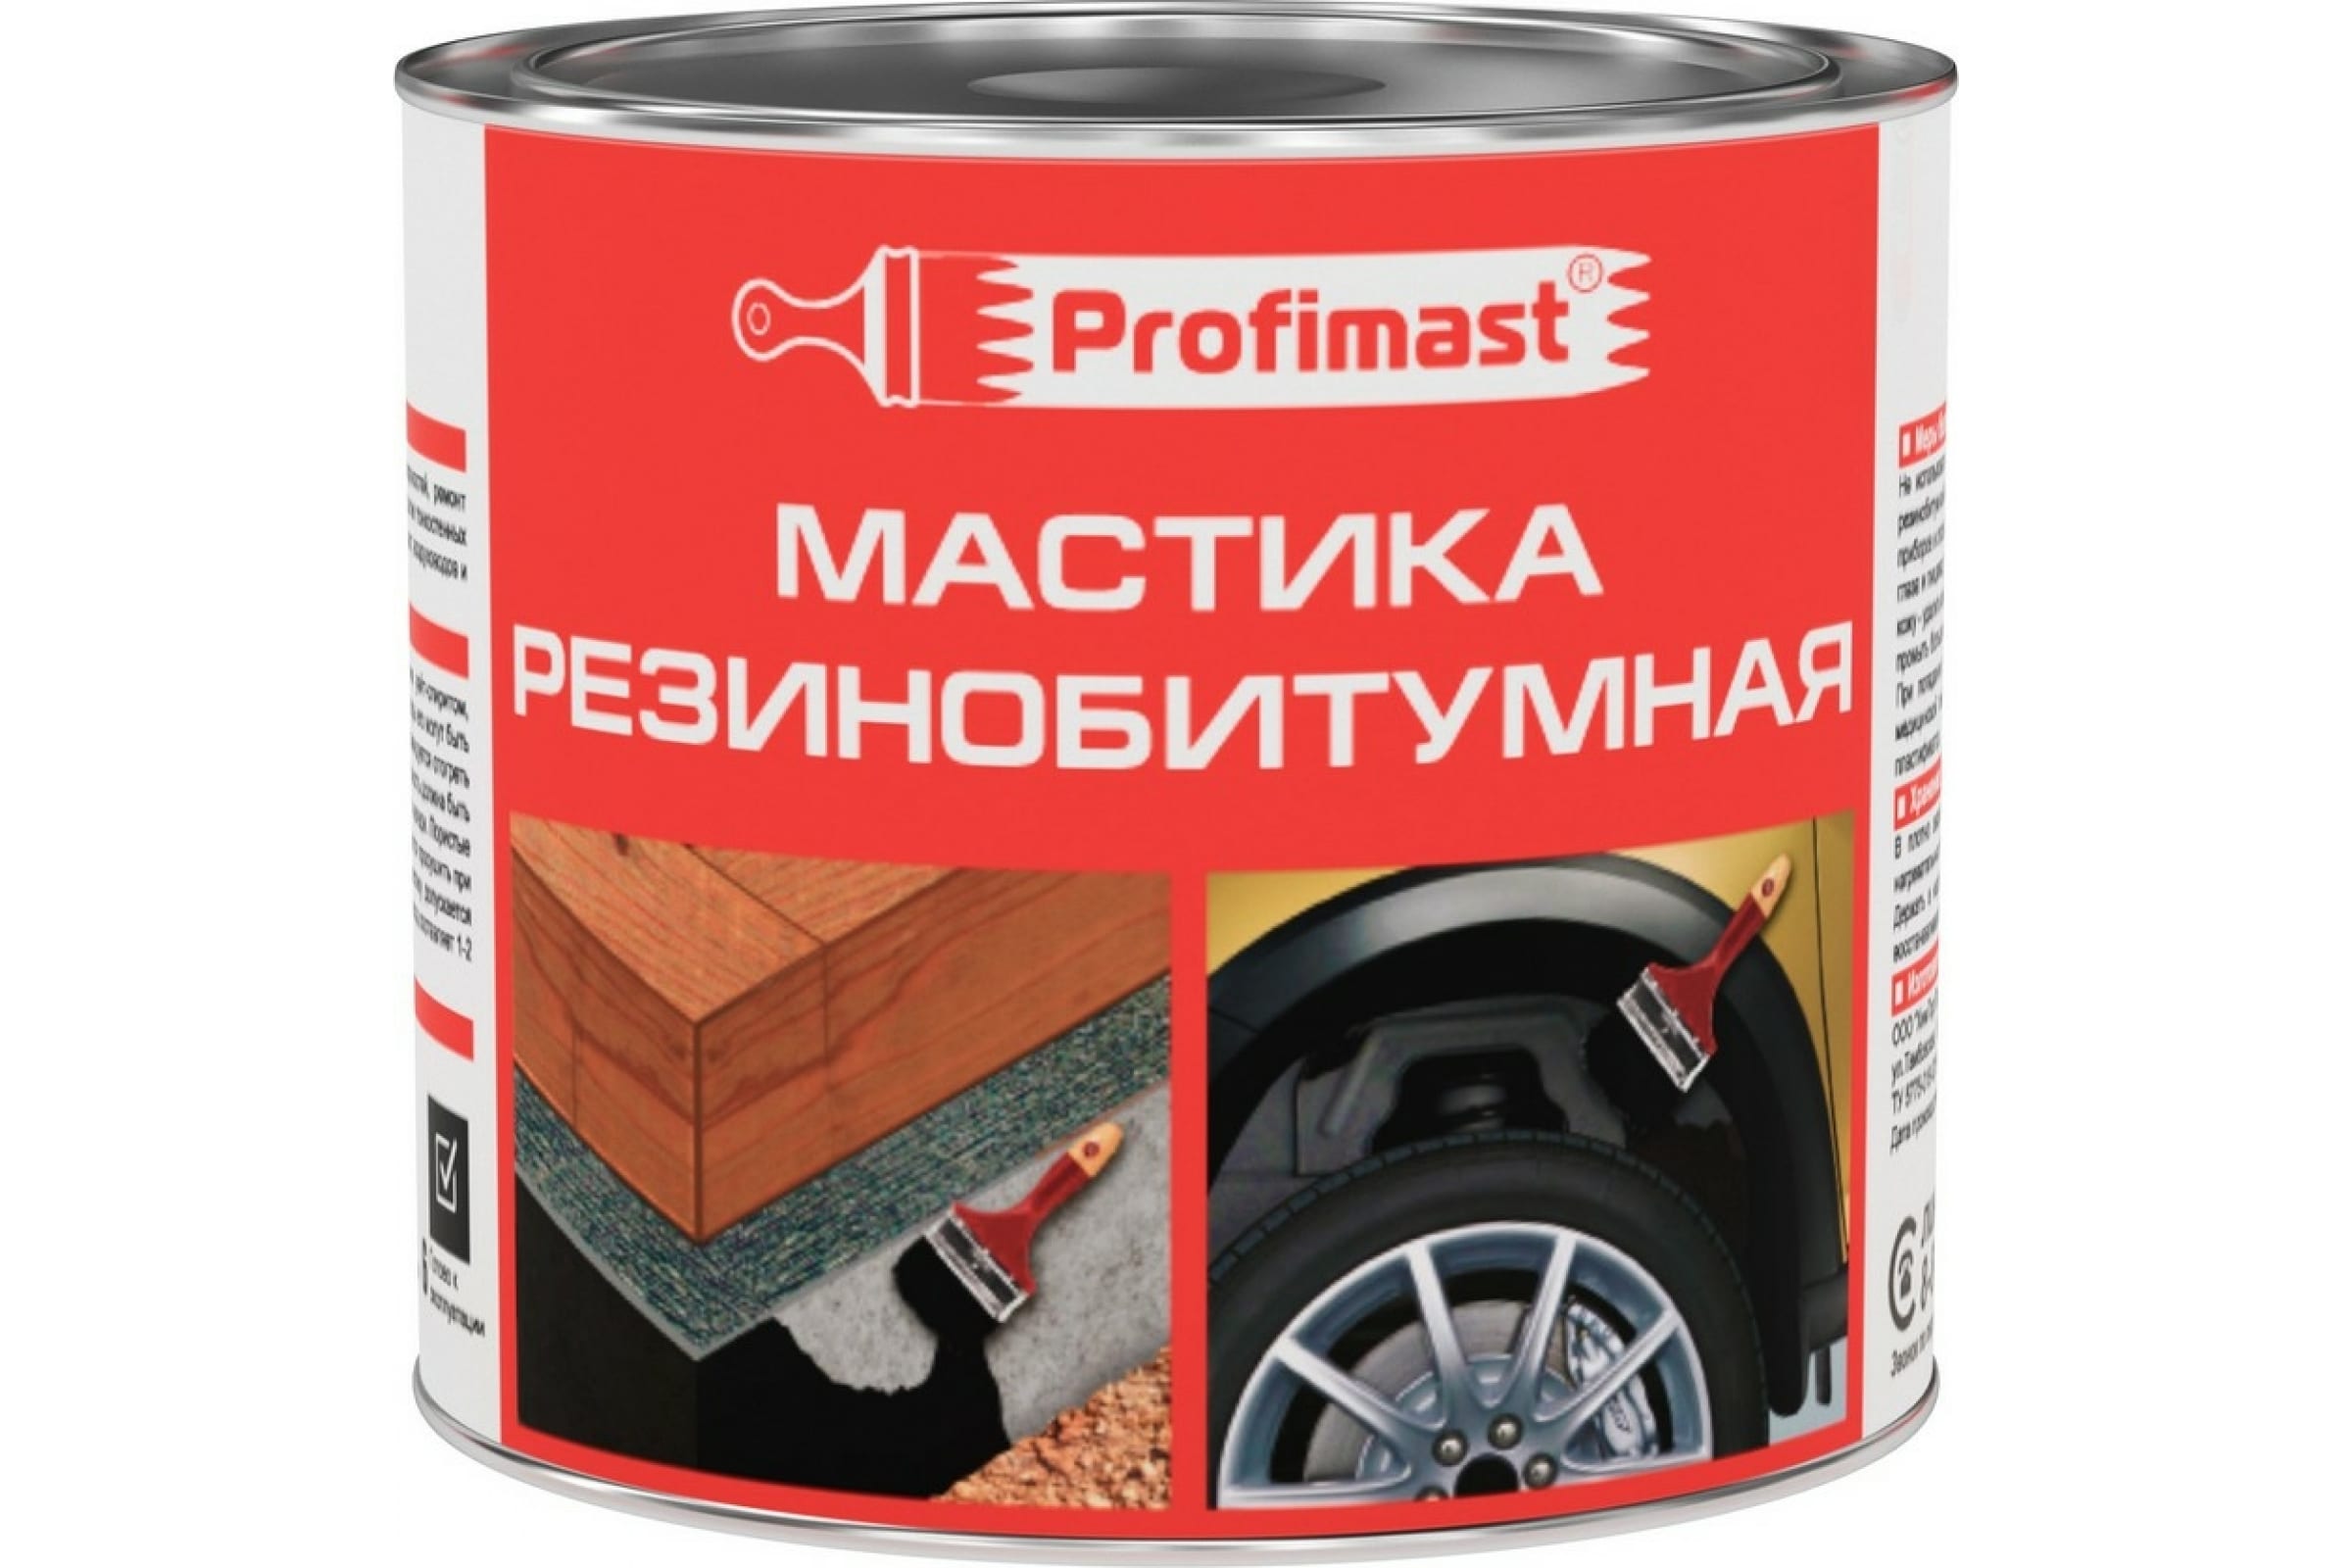 Profimast Мастика резинобитумная 2 л / 1,8 кг 4607952900677